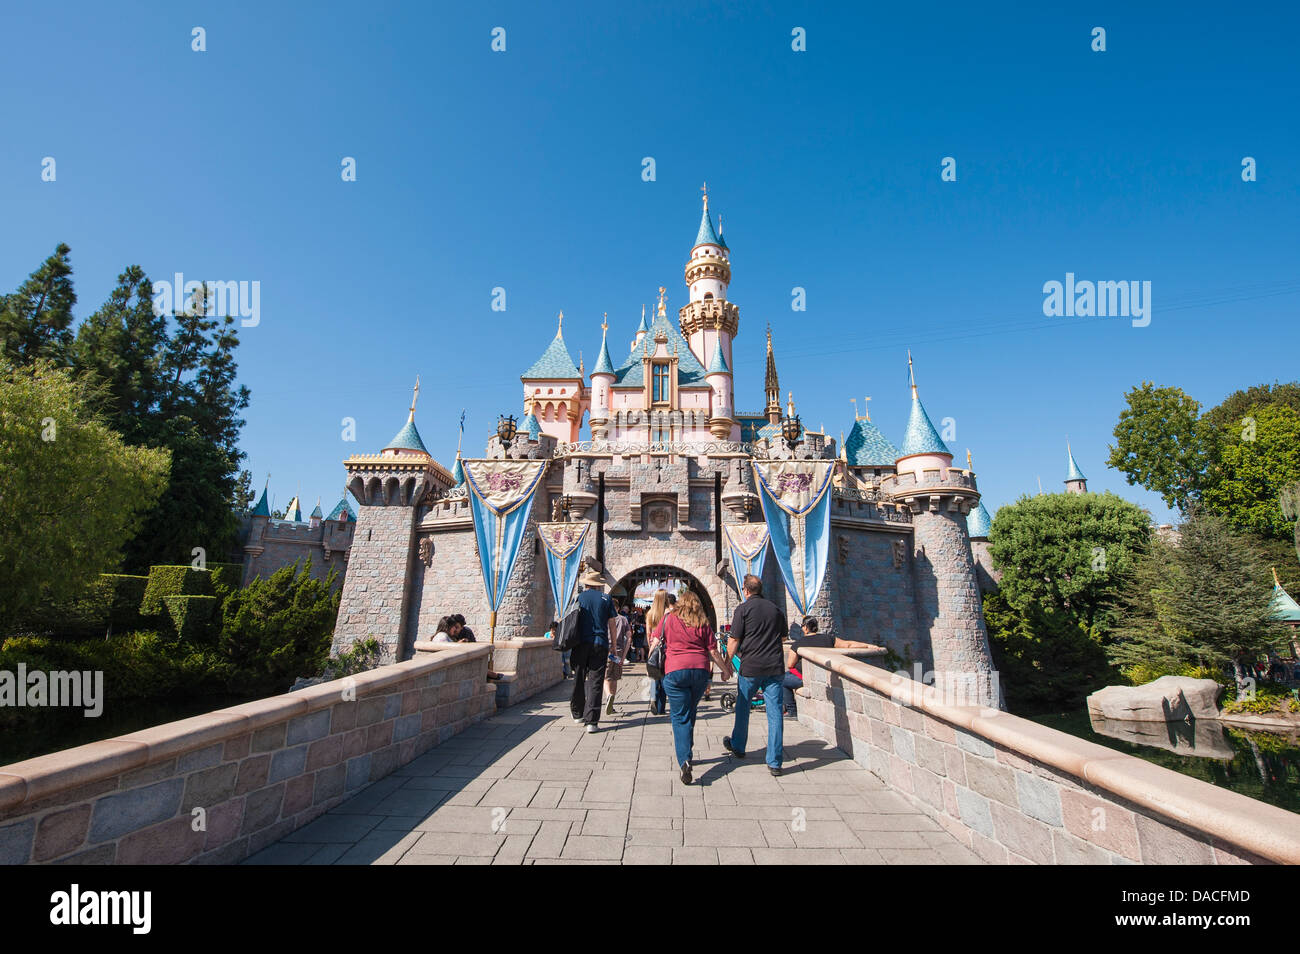 Magic Kingdom Cinderella Castle Disneyland park, Anaheim, California